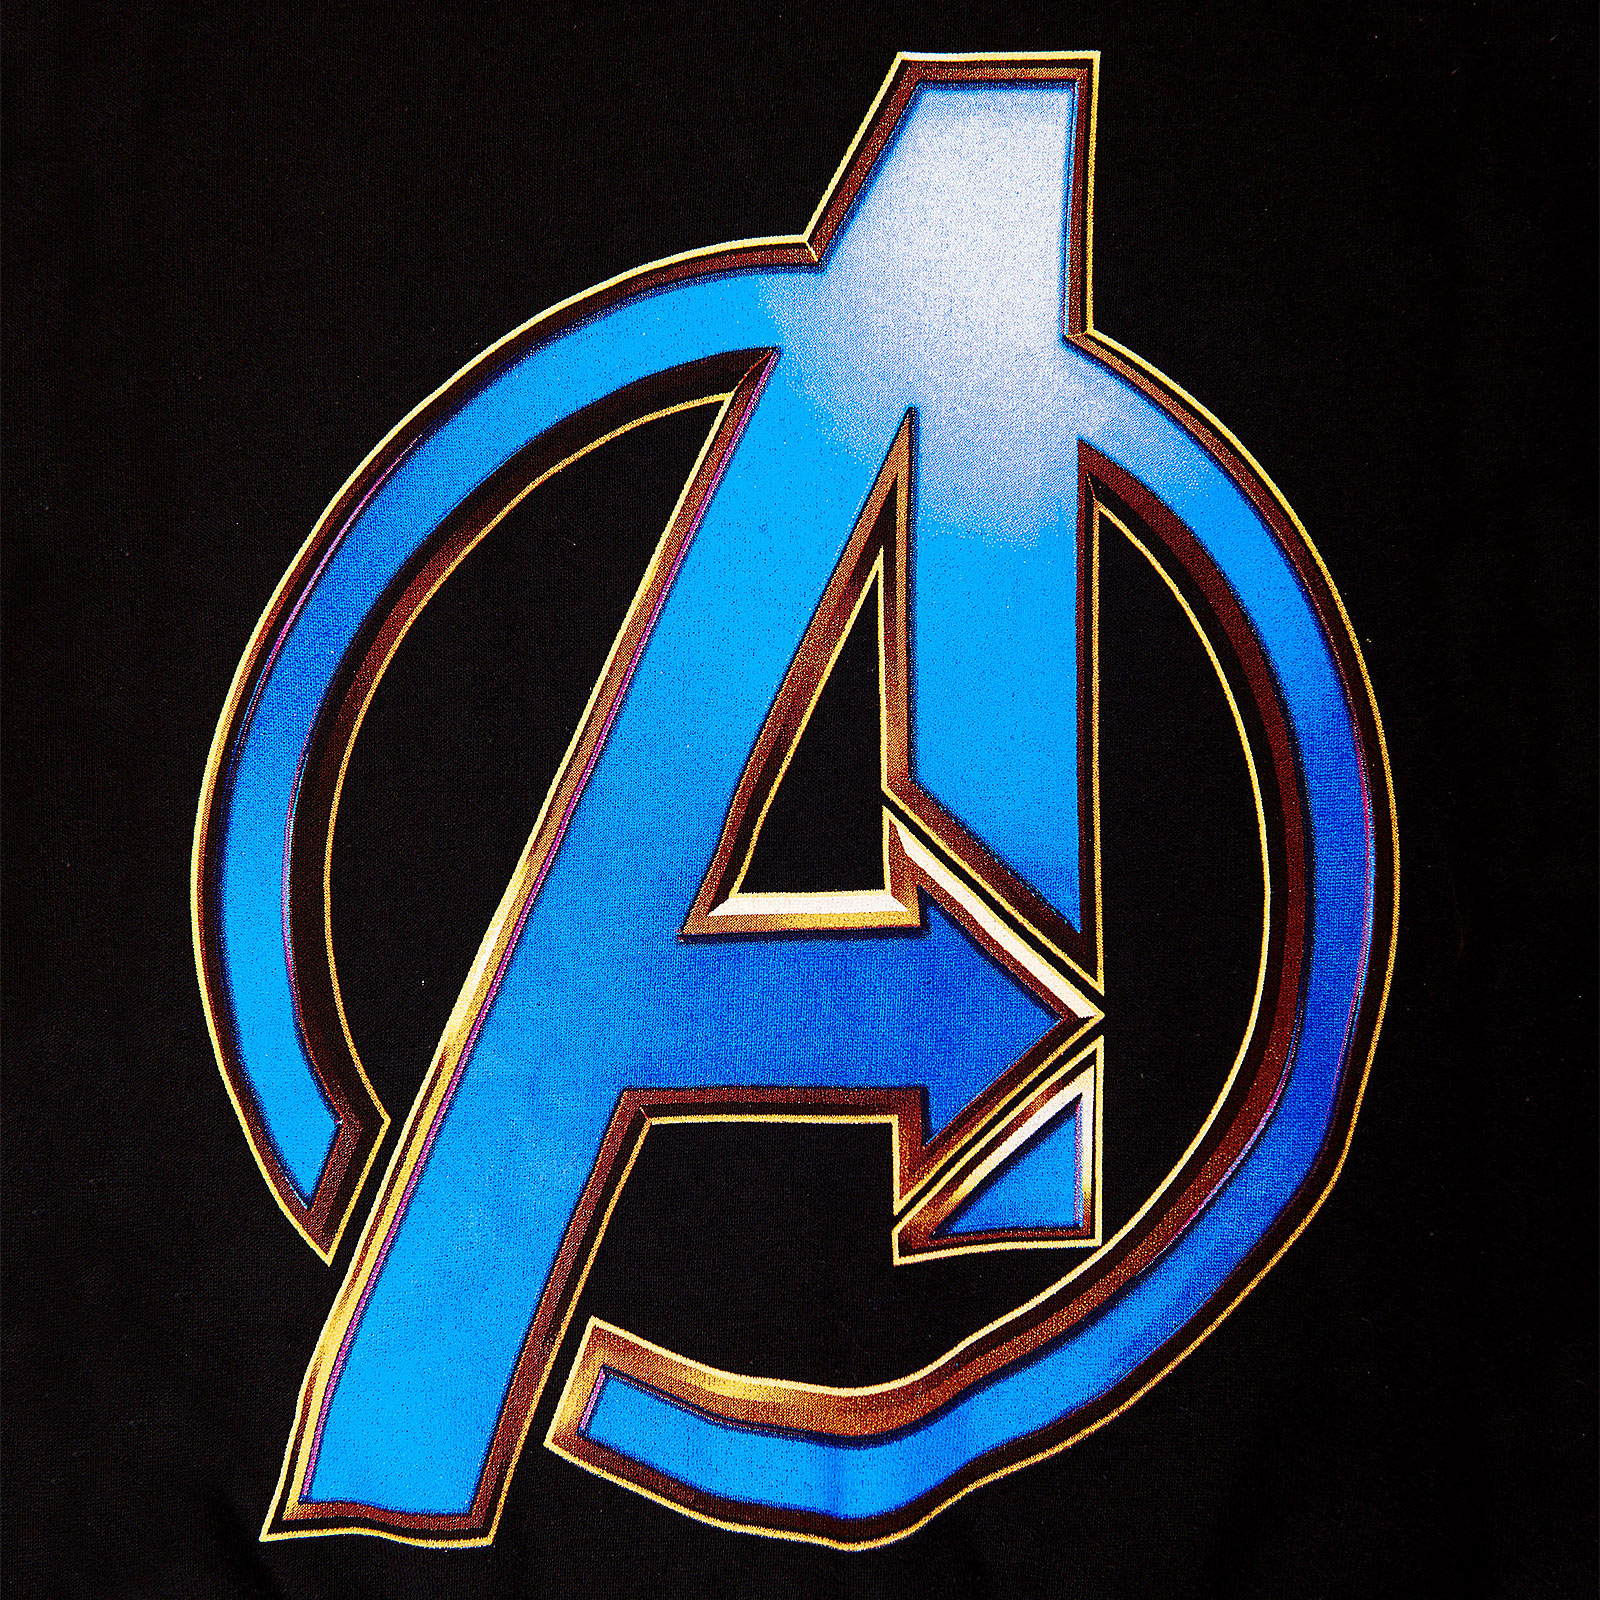 Avengers - Endgame Logo Kapuzenjacke schwarz